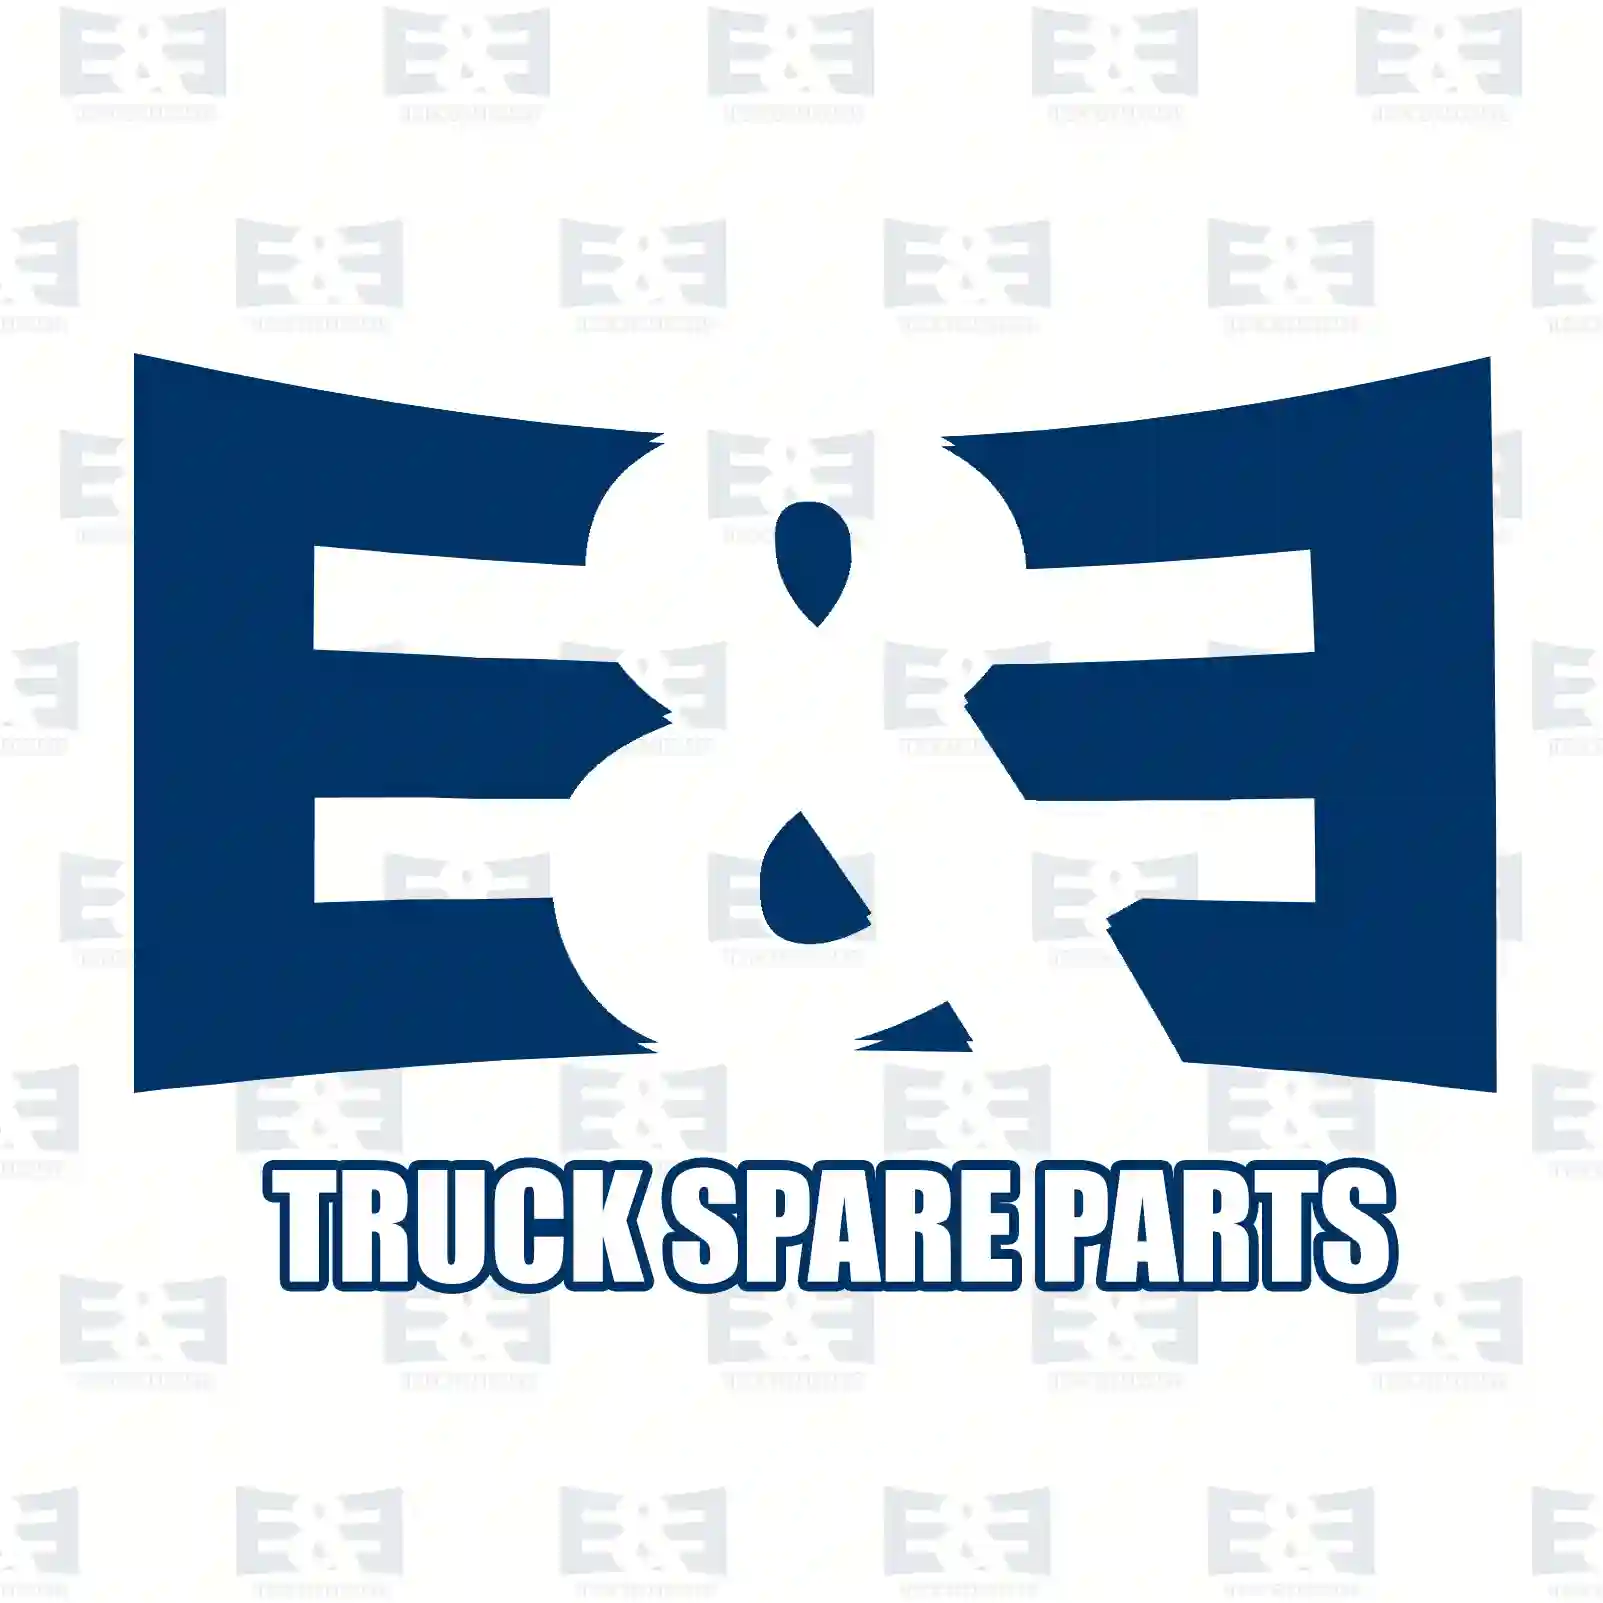 Ball joint, right hand thread, 2E2279293, 81953016362, , ||  2E2279293 E&E Truck Spare Parts | Truck Spare Parts, Auotomotive Spare Parts Ball joint, right hand thread, 2E2279293, 81953016362, , ||  2E2279293 E&E Truck Spare Parts | Truck Spare Parts, Auotomotive Spare Parts